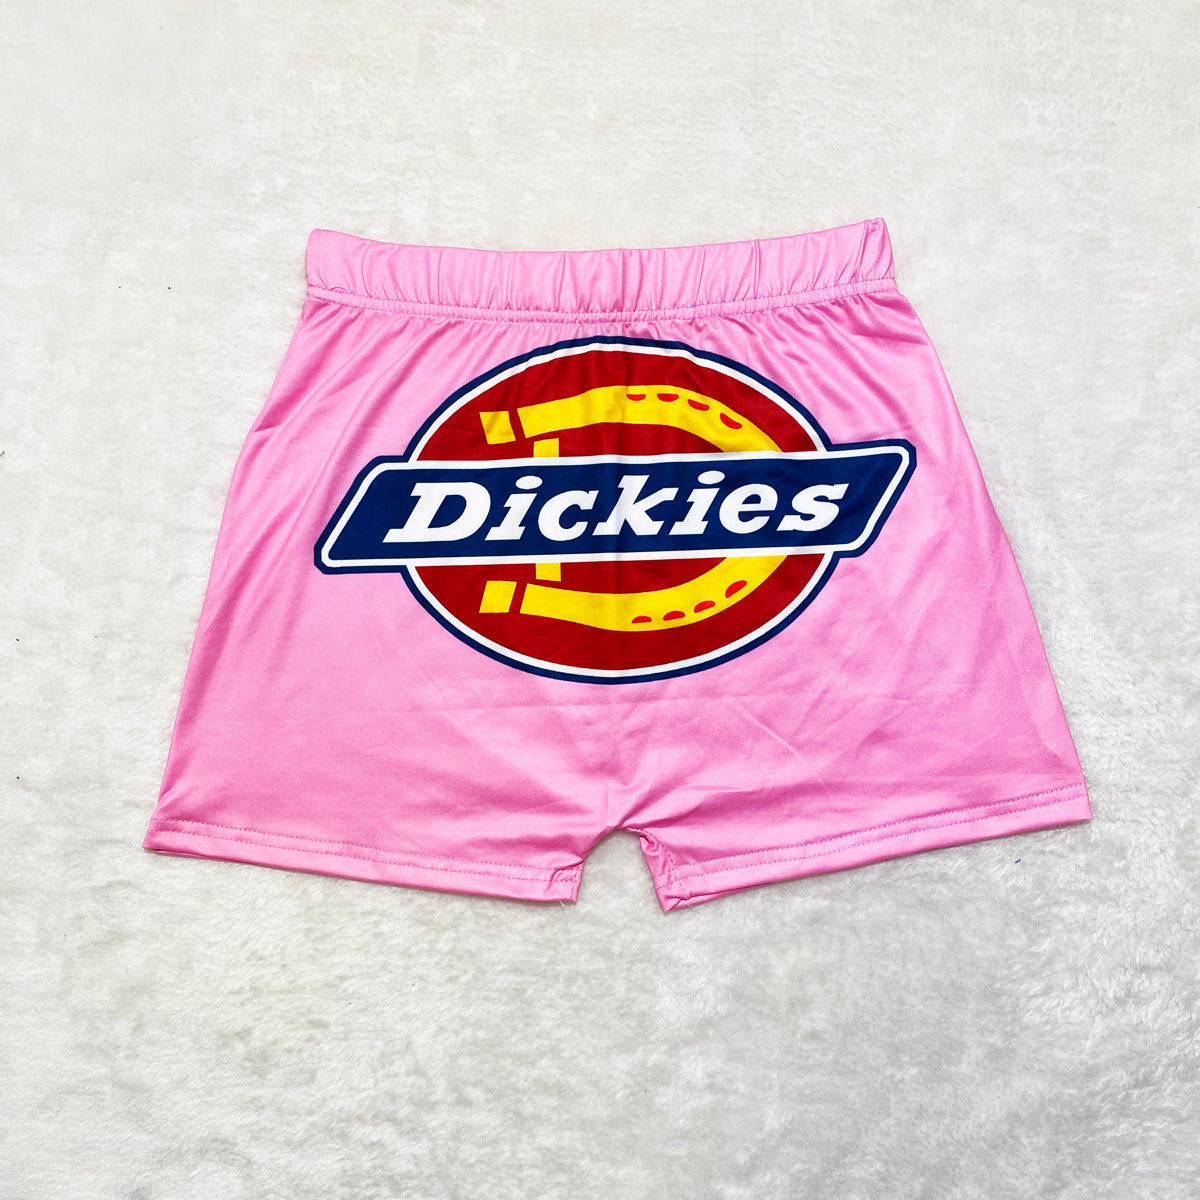 “Dickies” Shorts